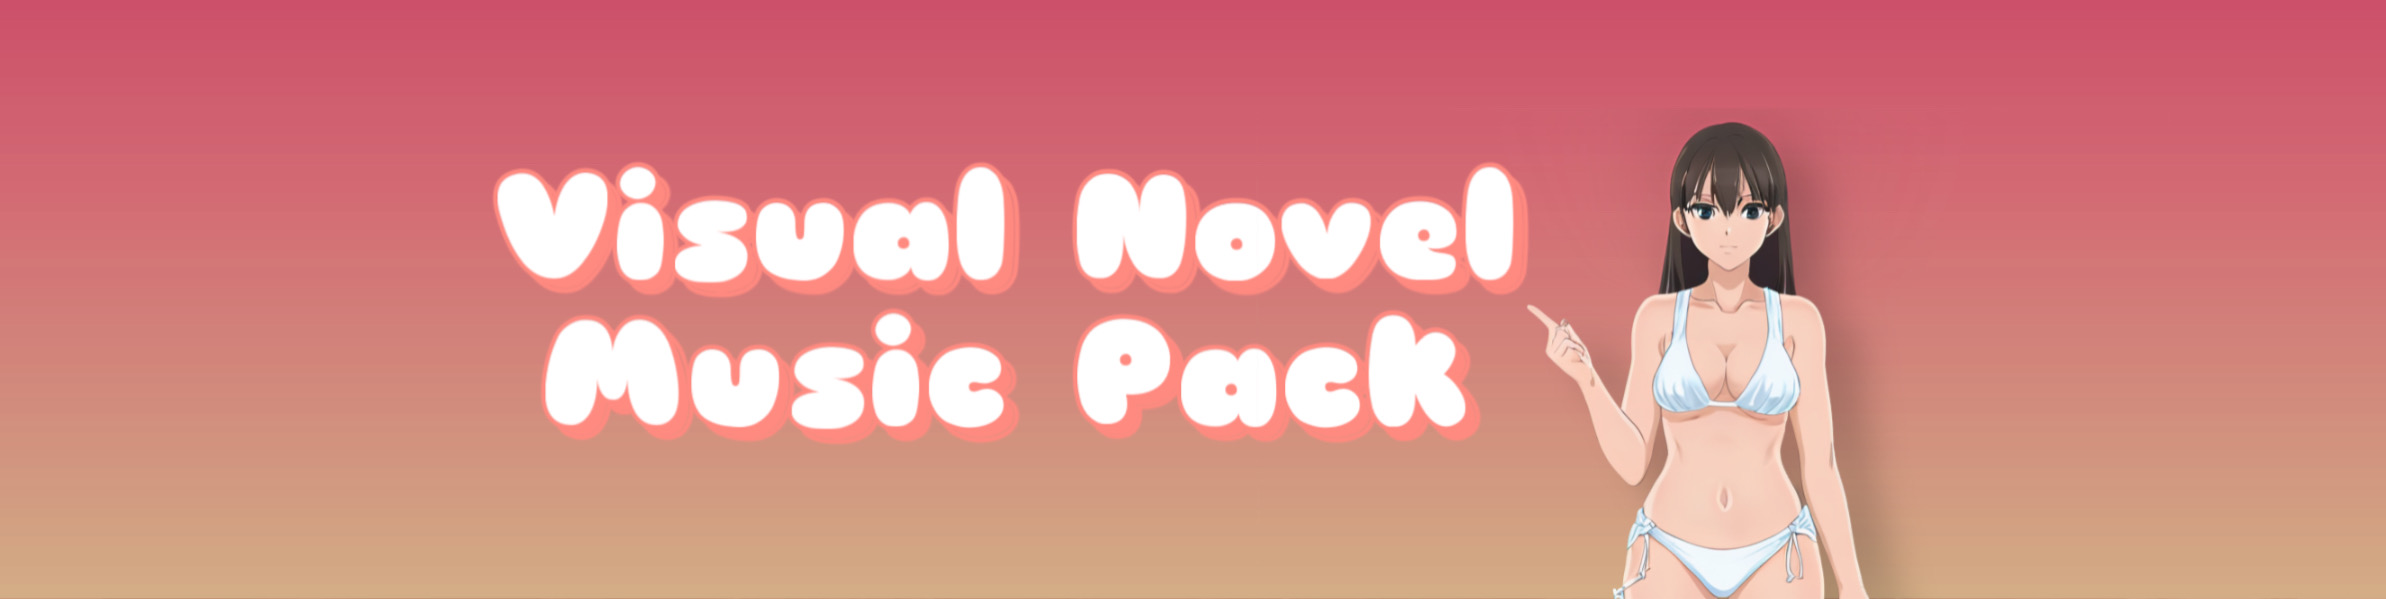 Visual Novel Music Pack - Romantic, Soft, Playful Audio